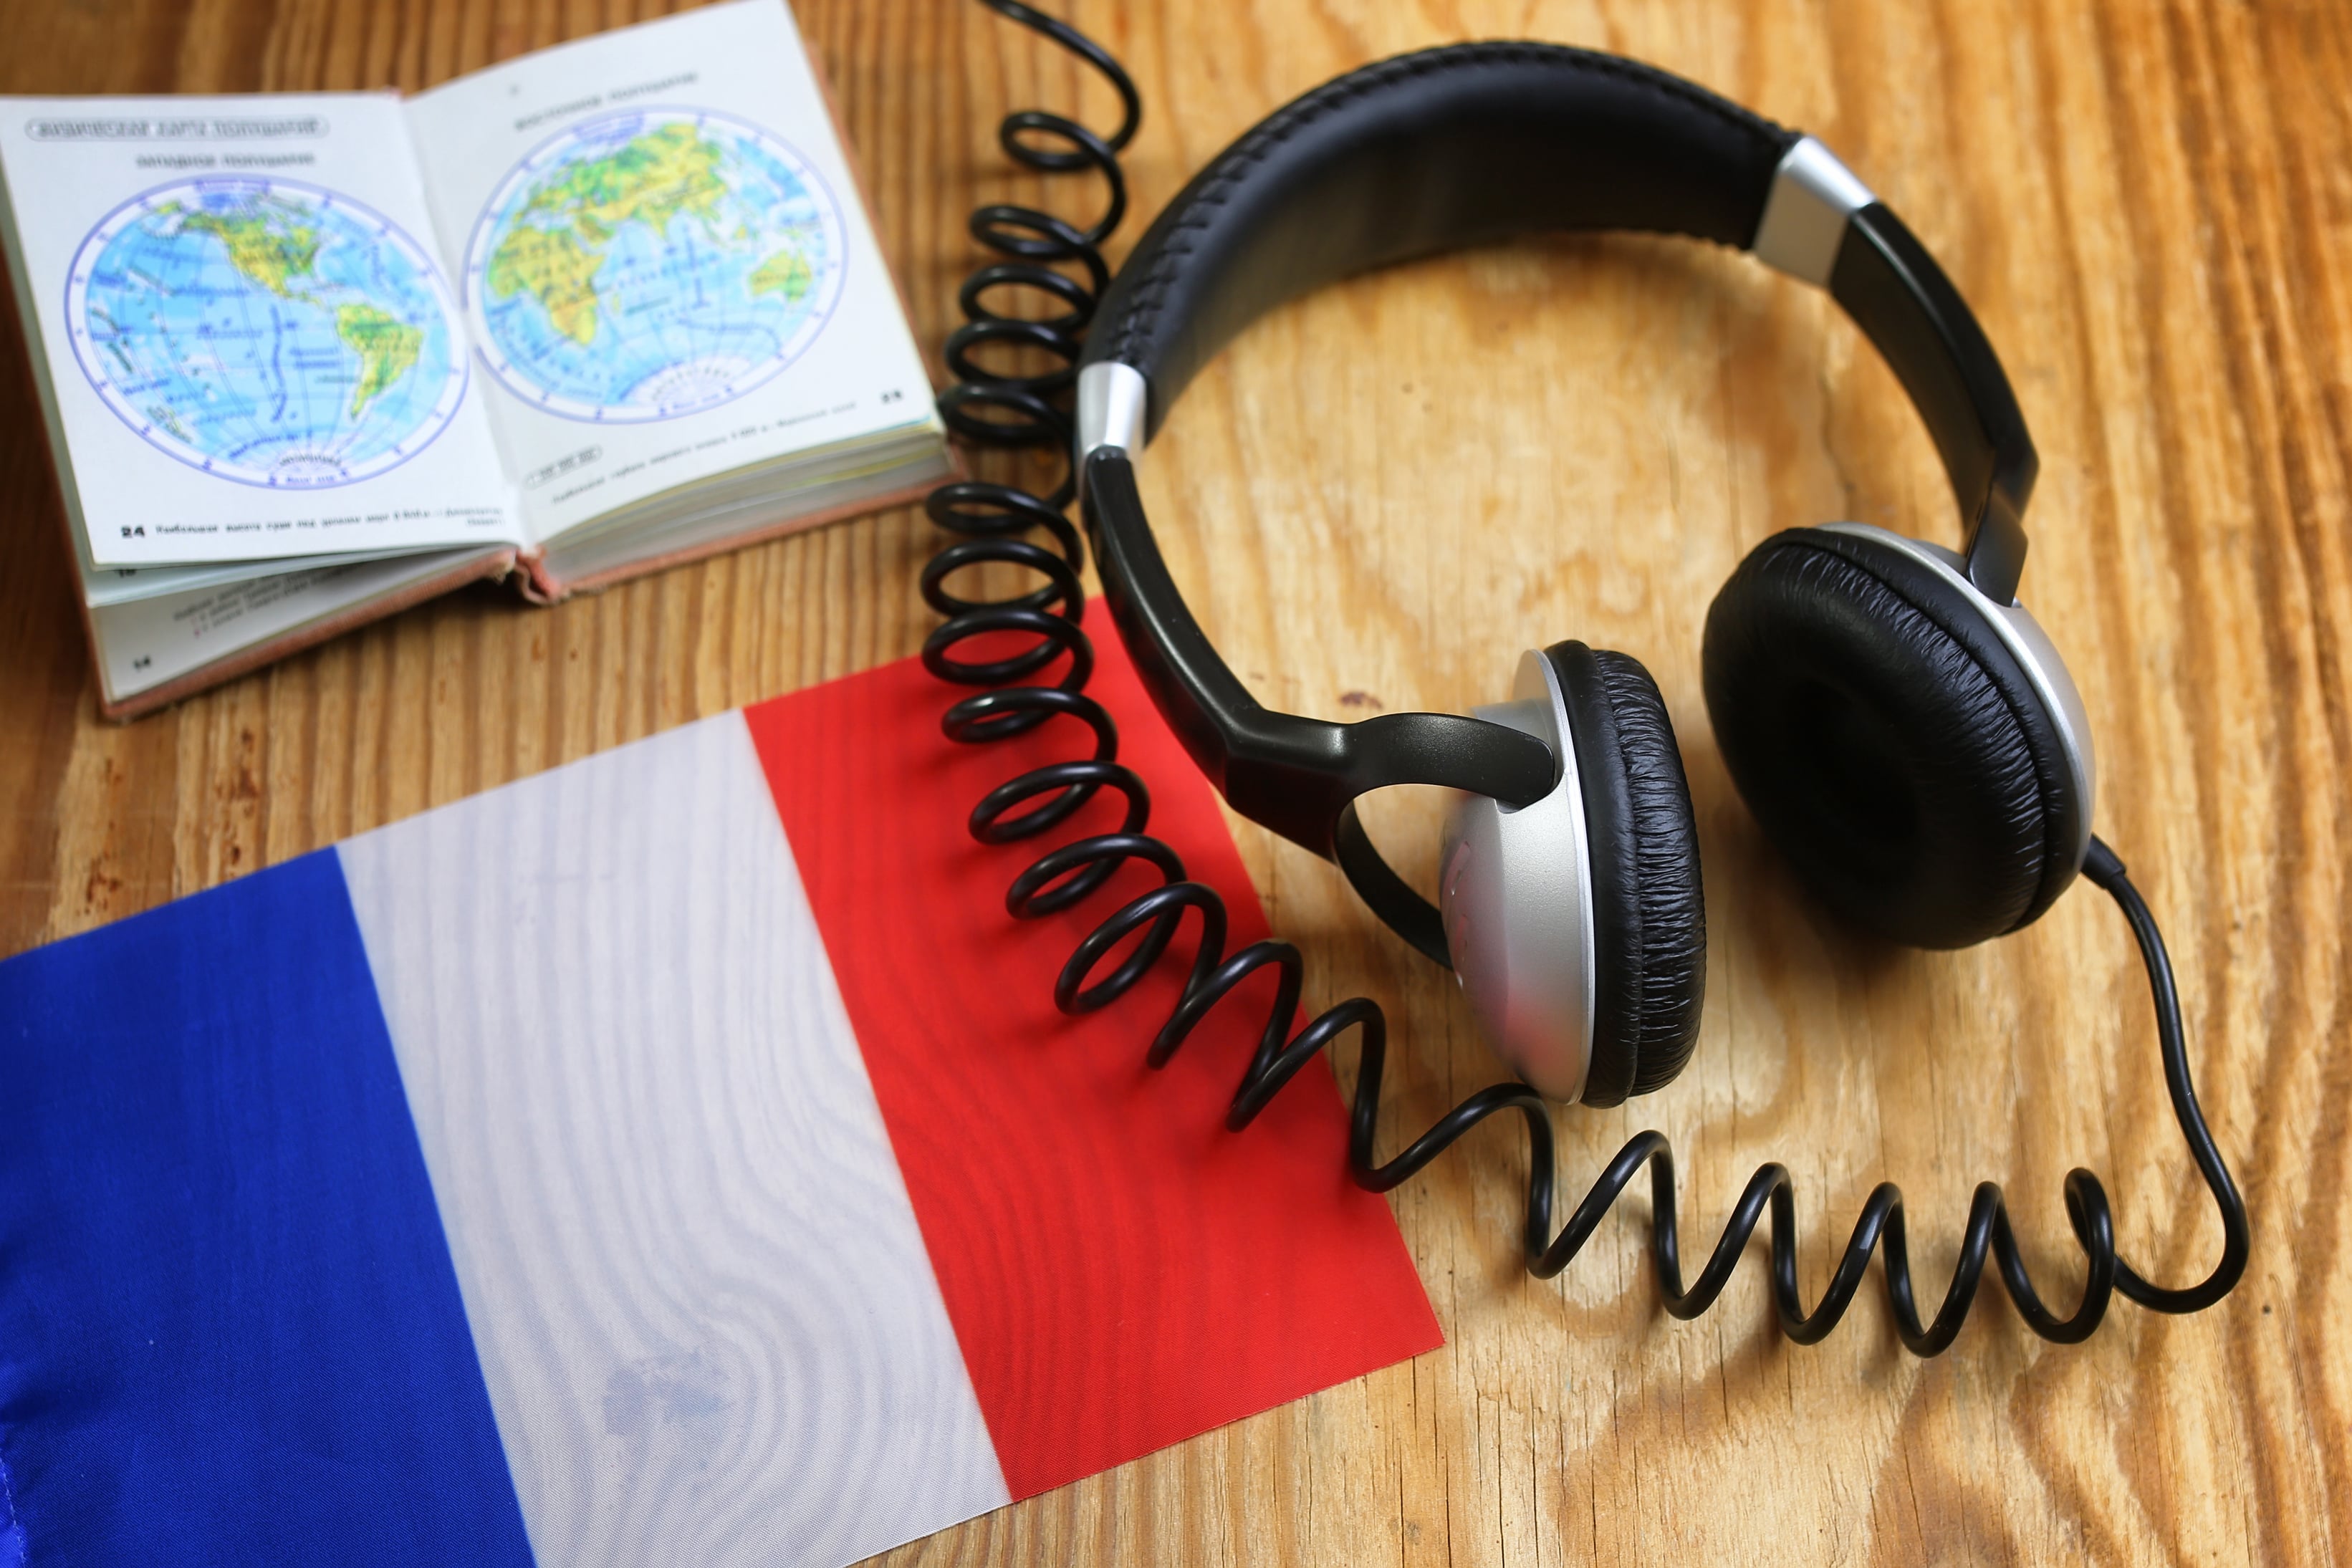 language-course-headphone-flag-wooden-table-min